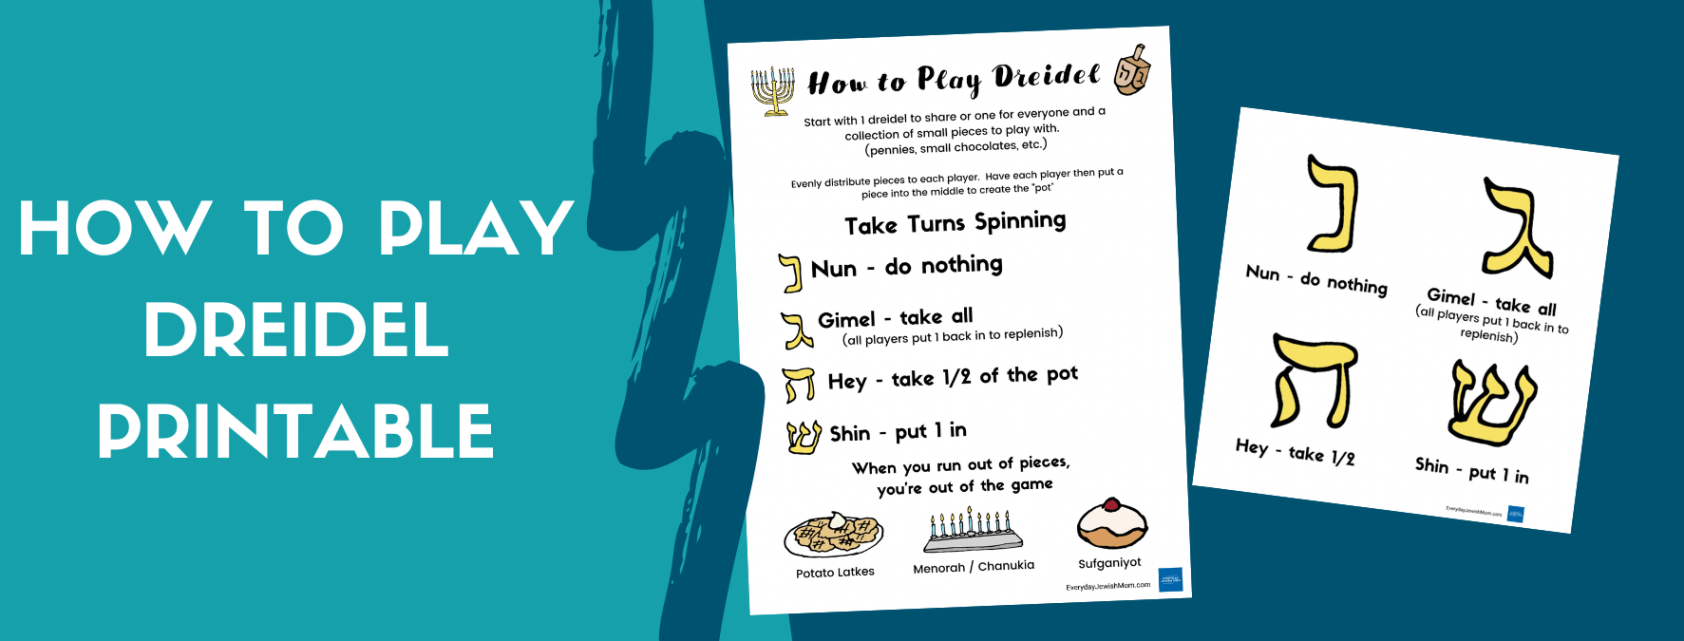 How to Play Dreidel Printable - Everyday Jewish Mom